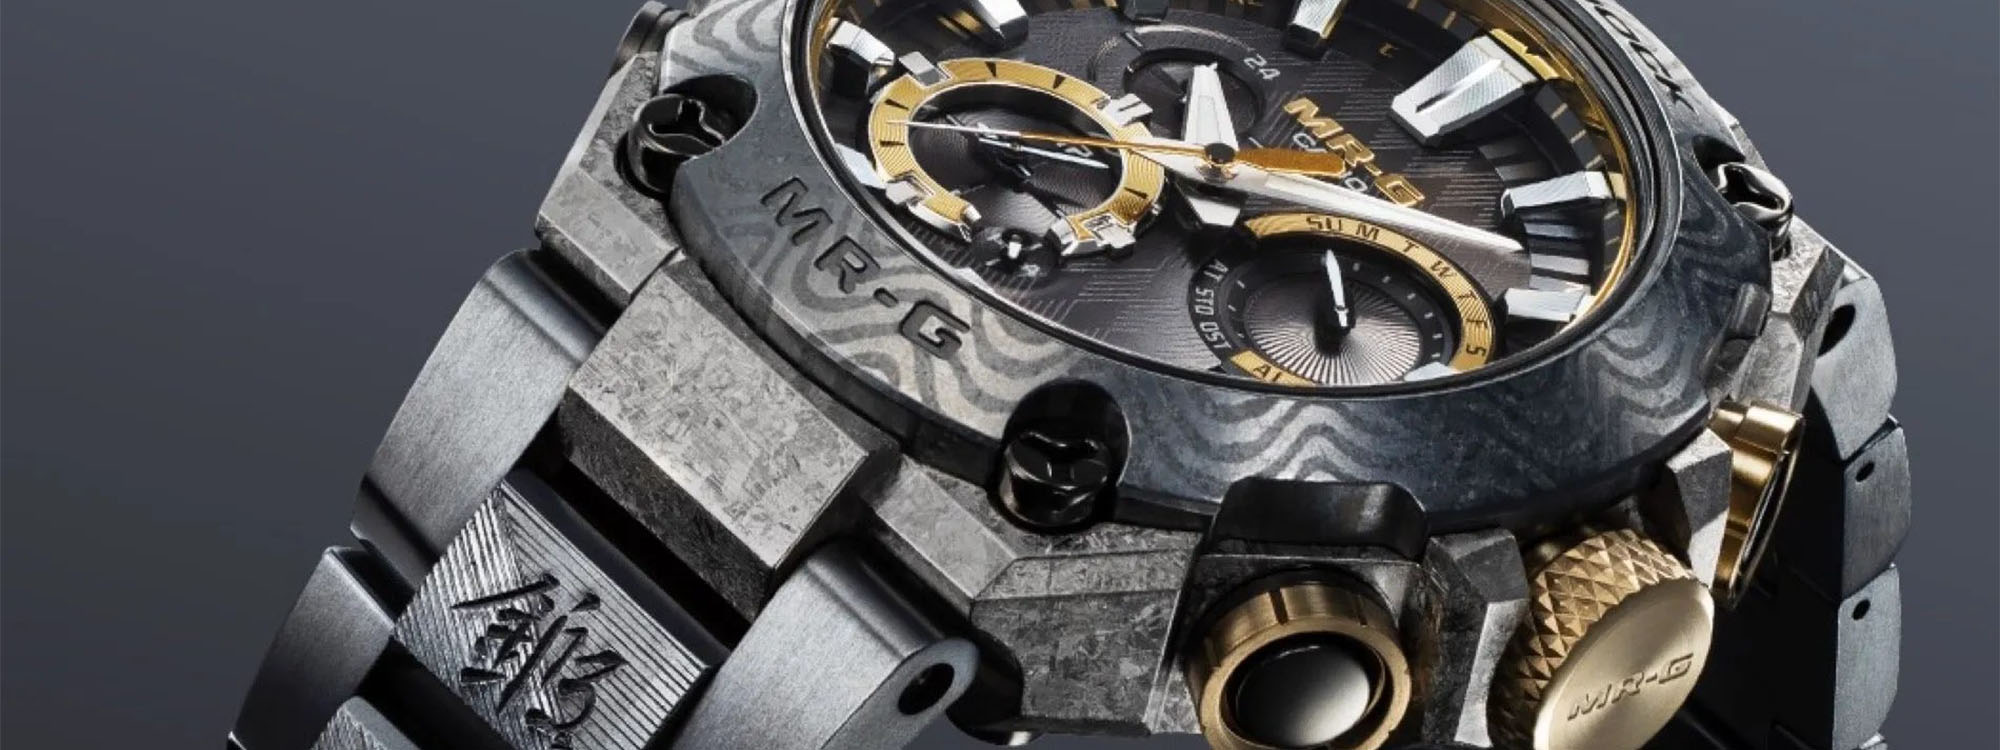 Casio adds solar charging to a fan-favorite G-Shock watch